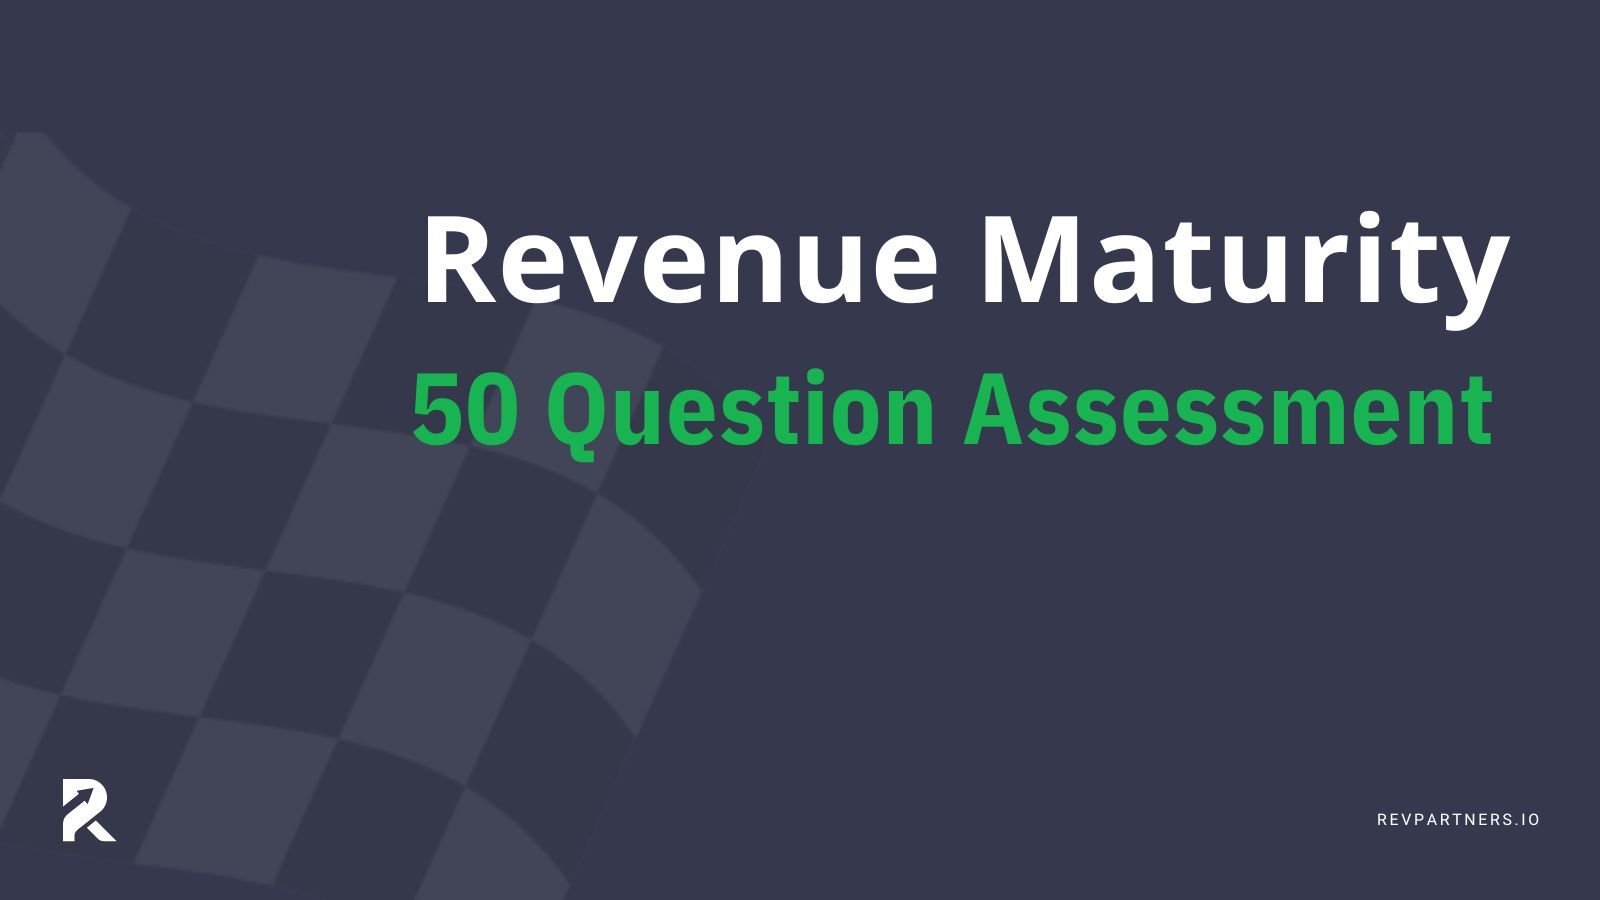 50 Question Revenue Maturity Assessment Graphic